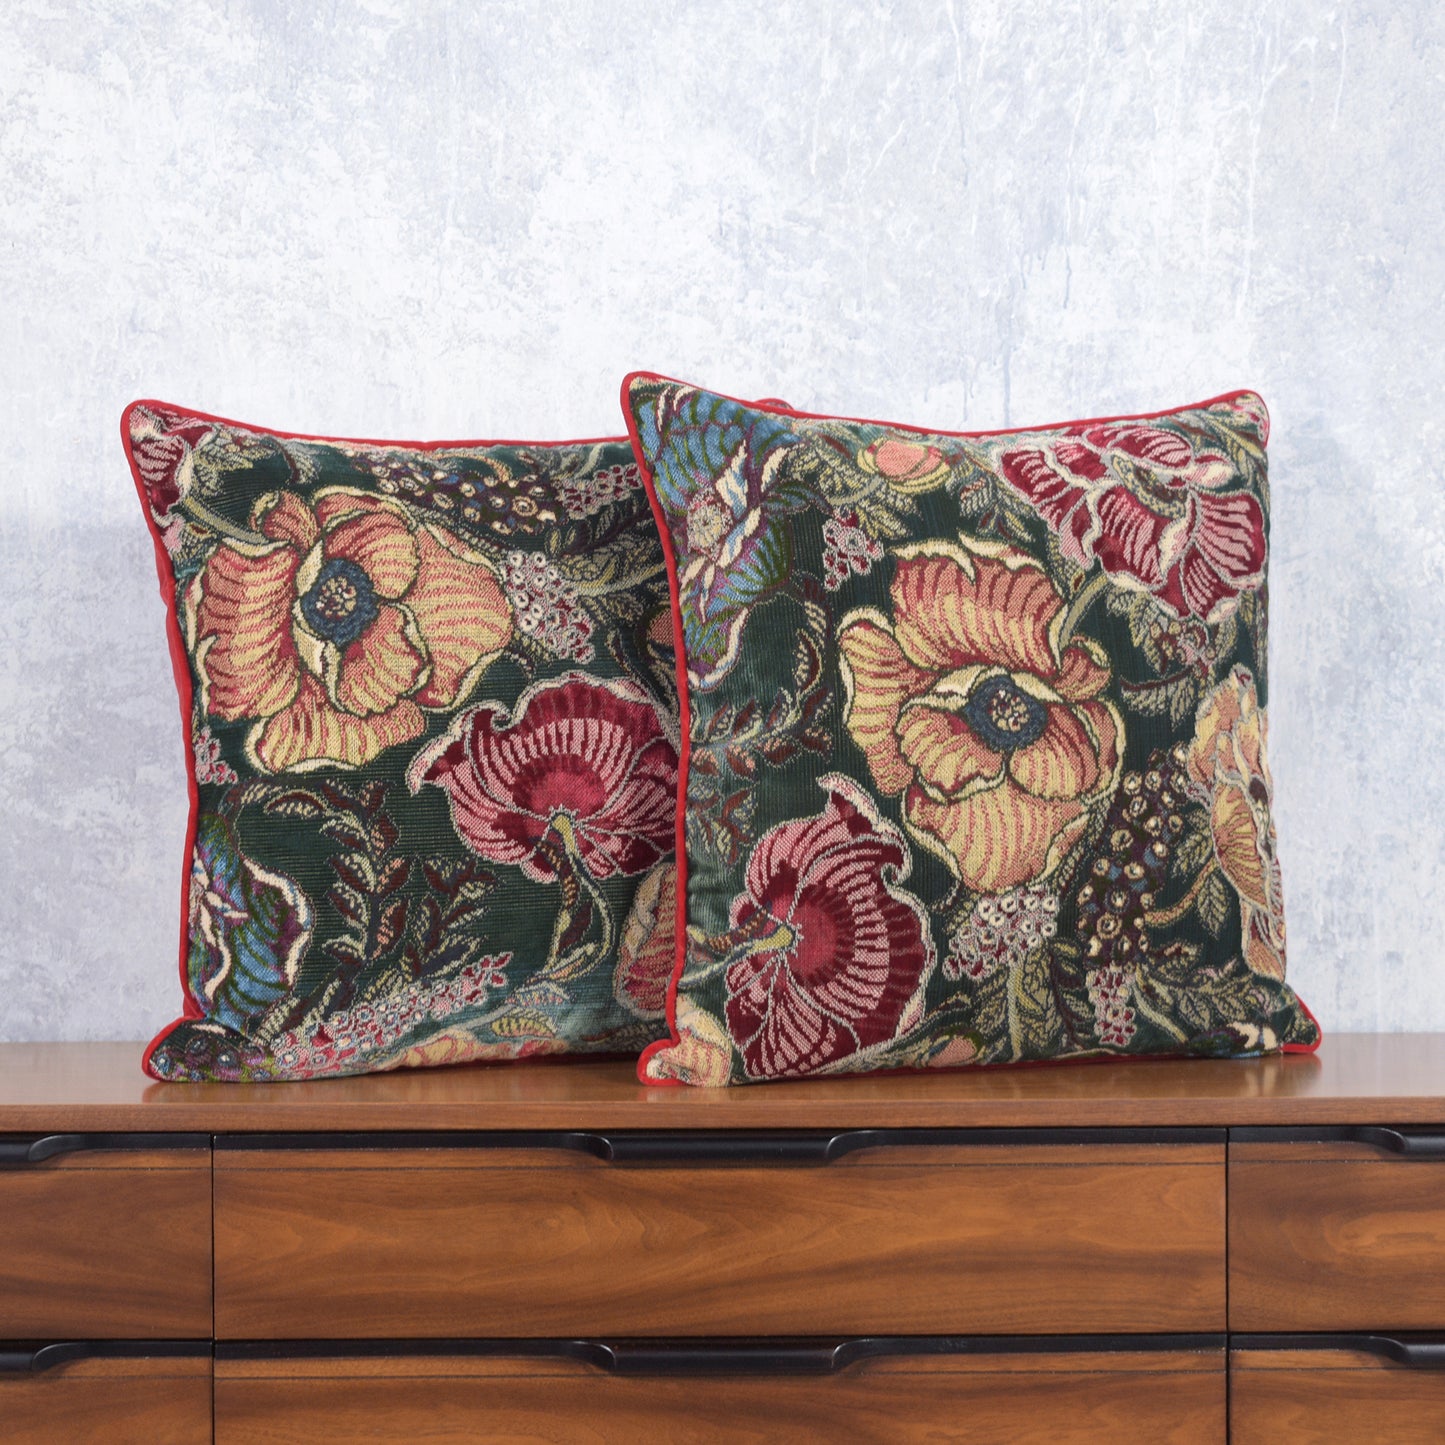 Antique Pillows with Red Velvet Floral Elegance